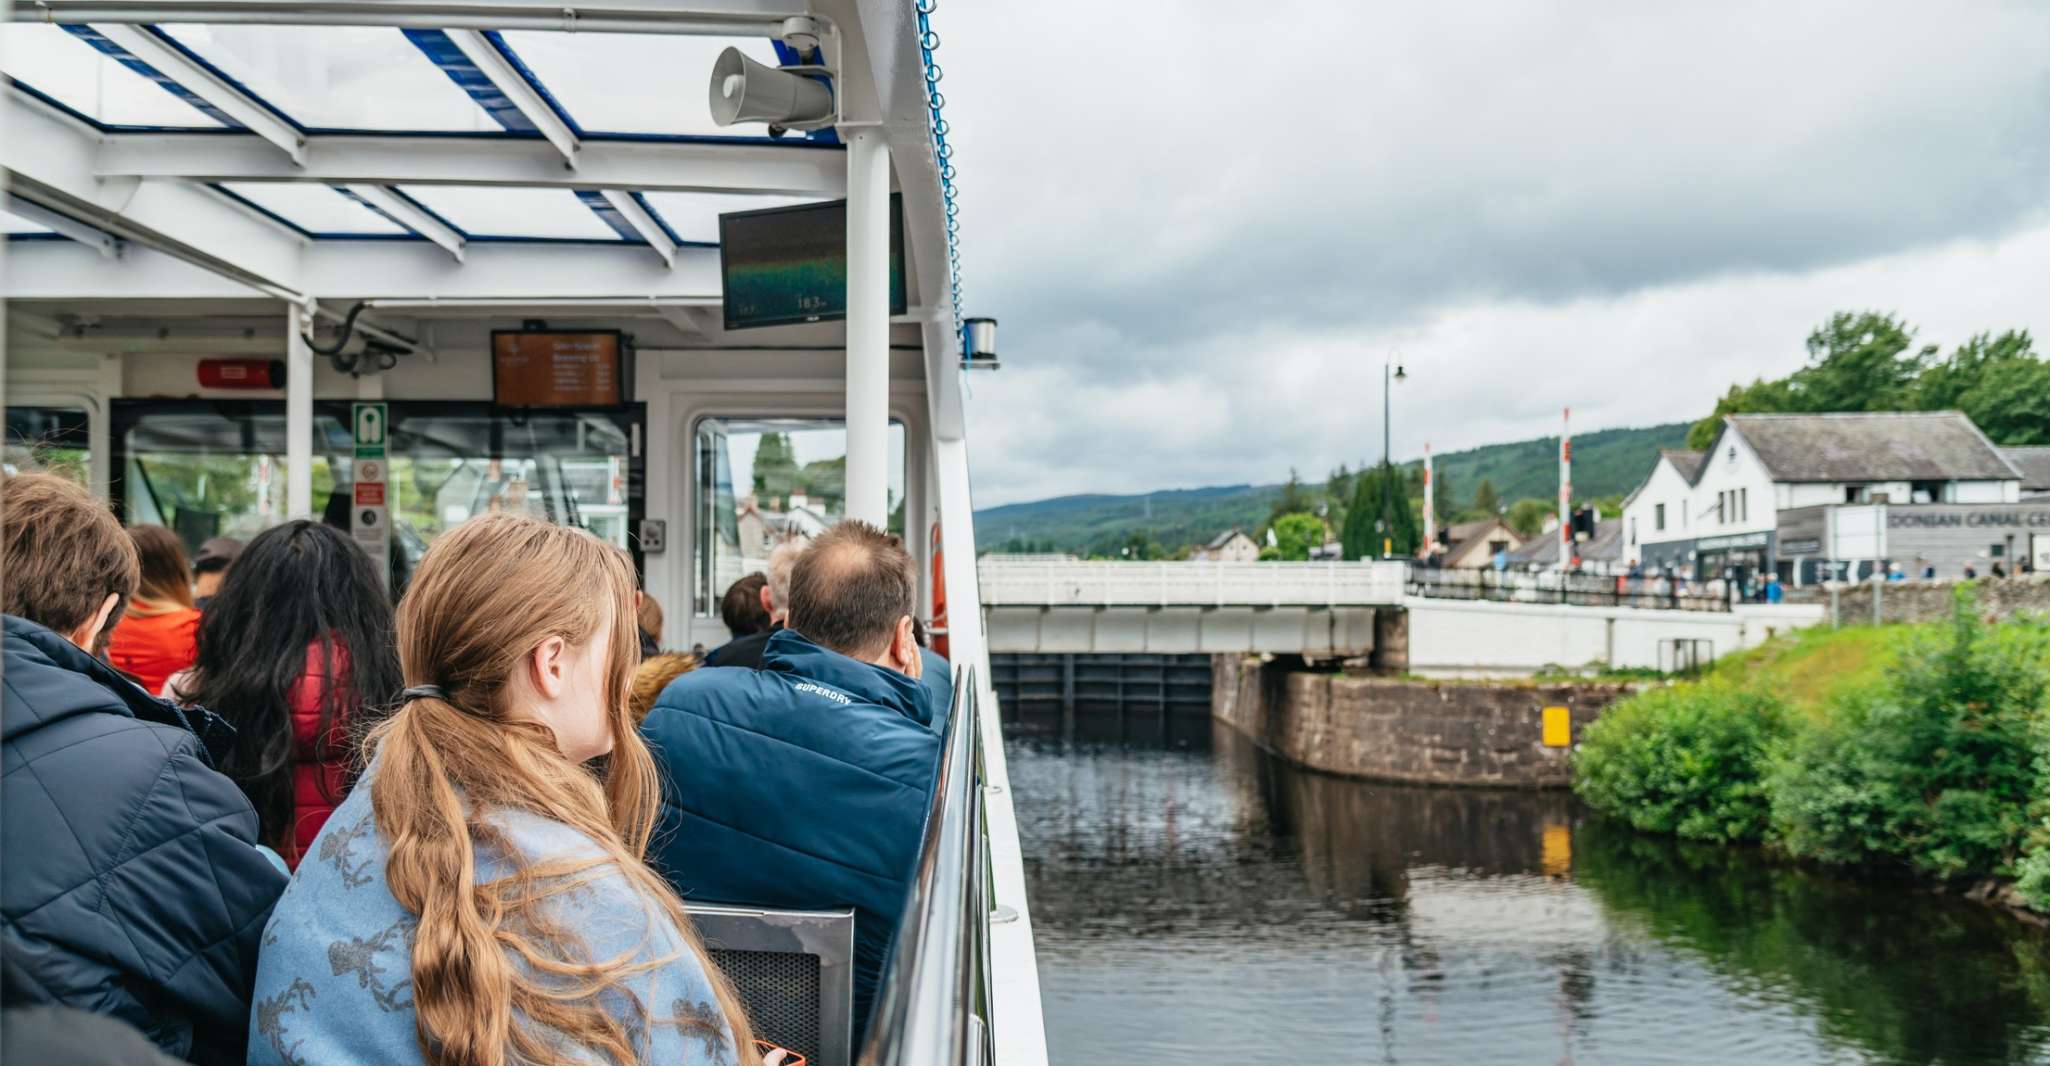 From Edinburgh, Loch Ness, Glencoe & Scottish Highlands Tour - Housity